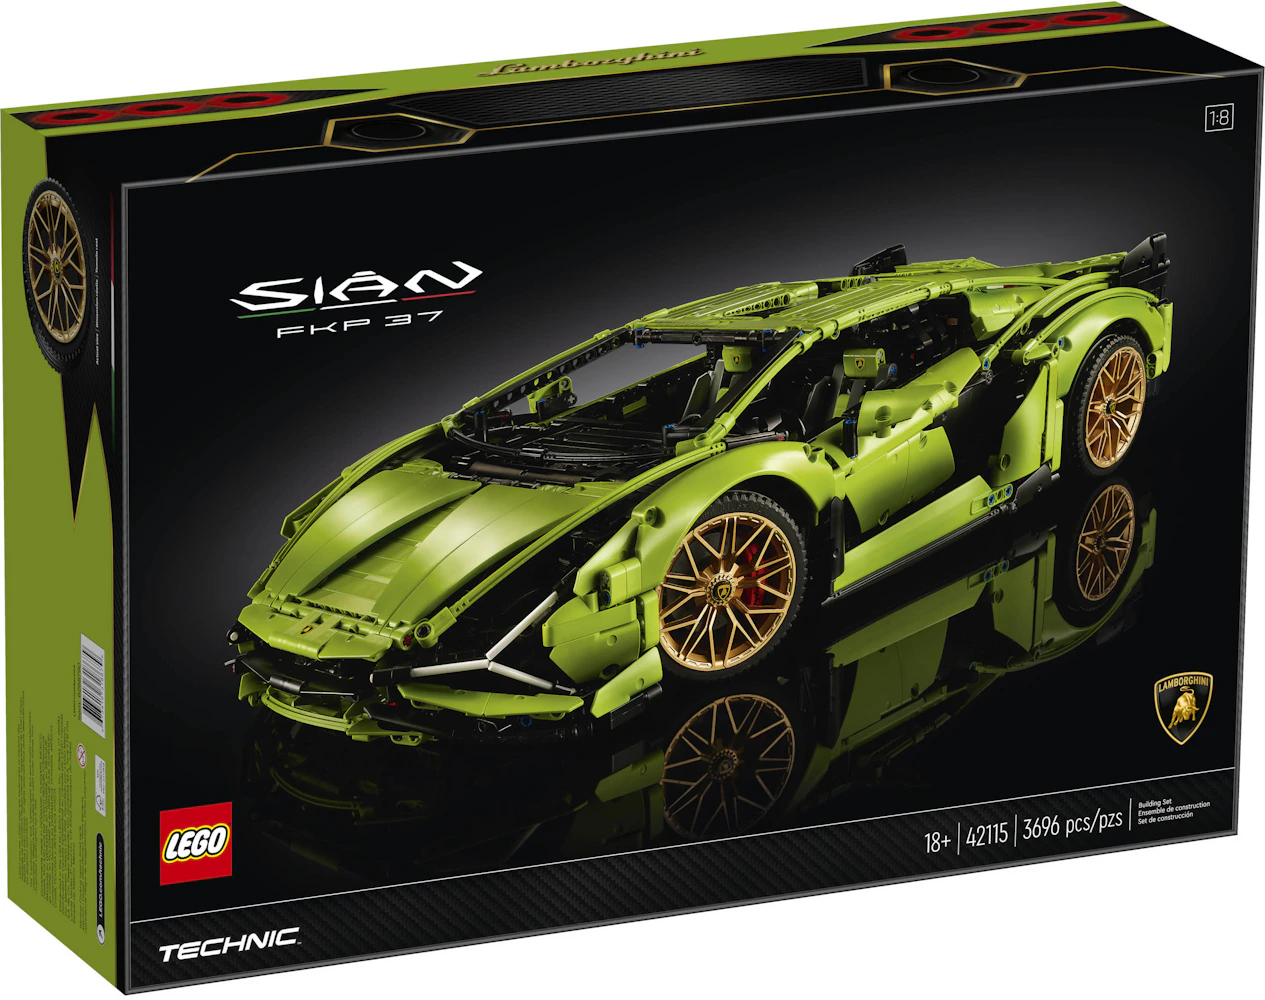 LEGO Technic Sian FKP Set 42115 - US